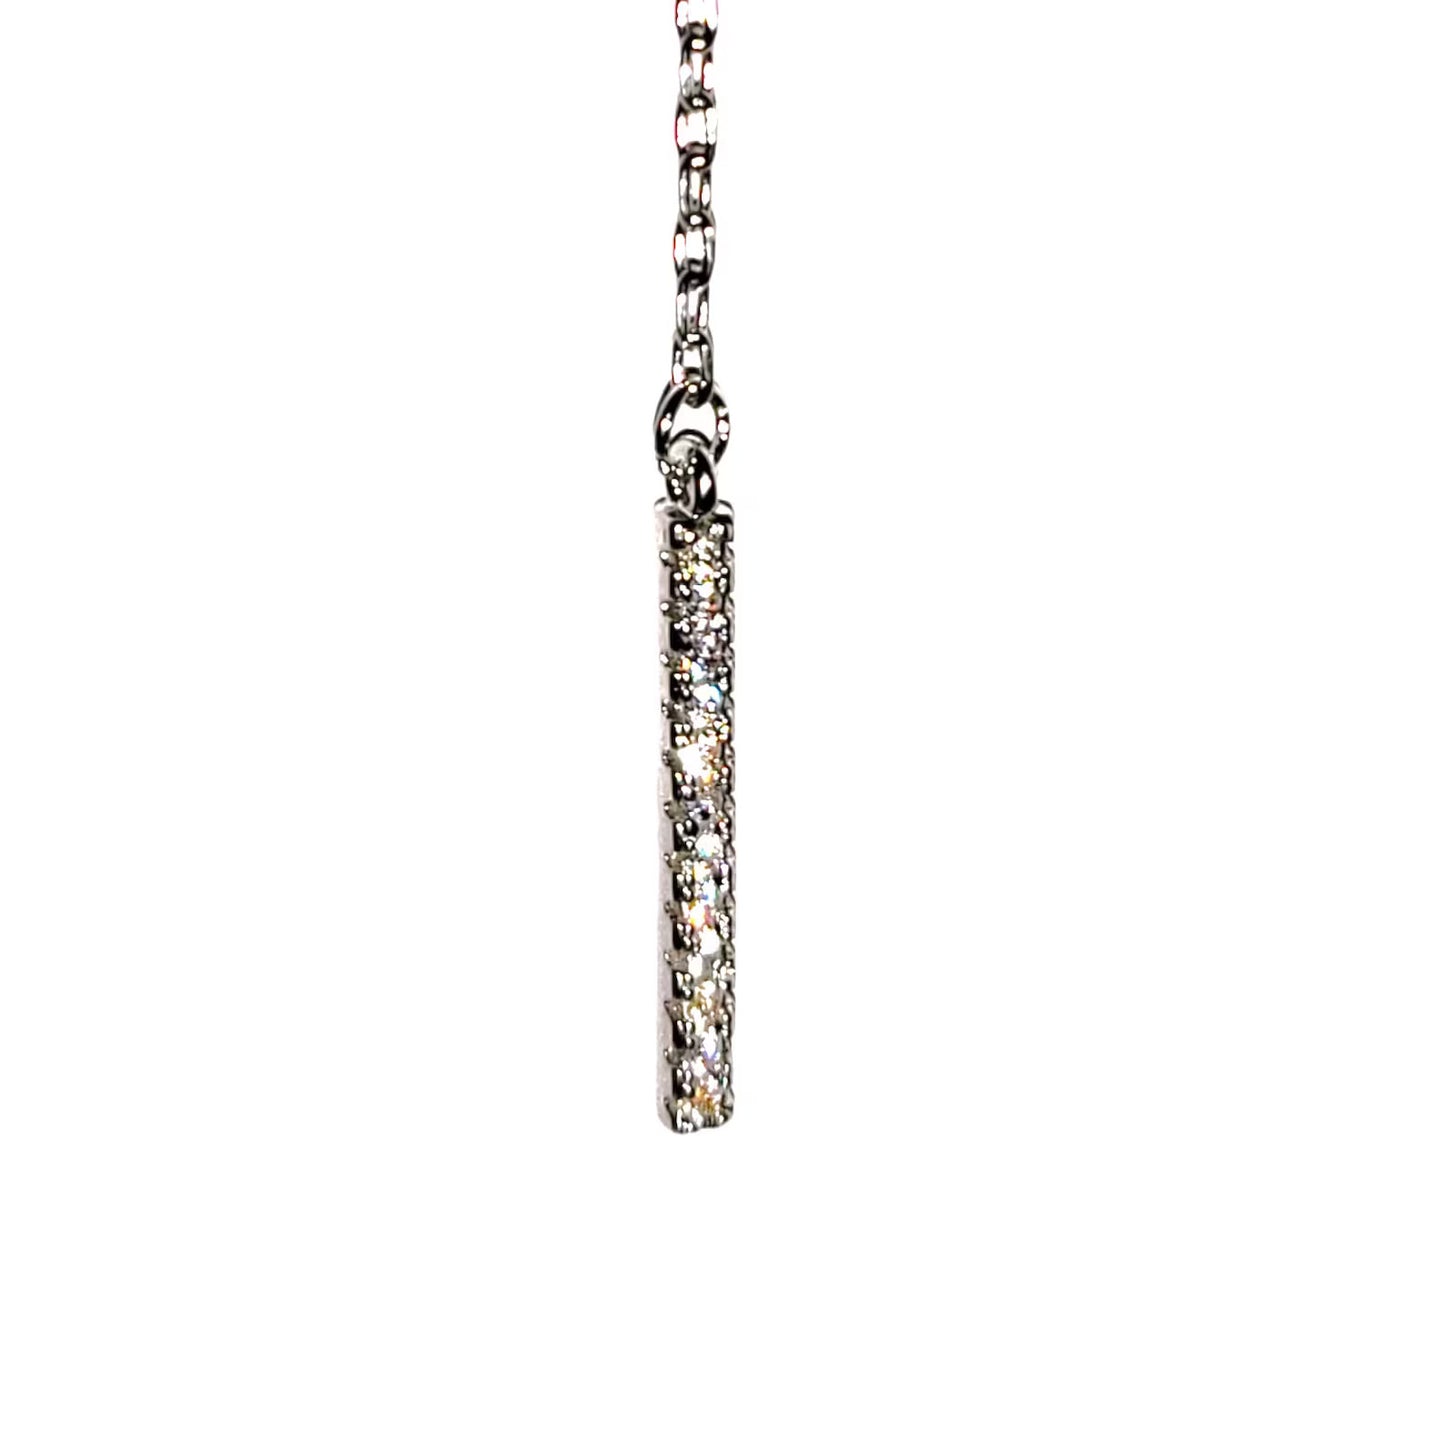 Sterling Silver Swarovski Crystal Accented V Necklace